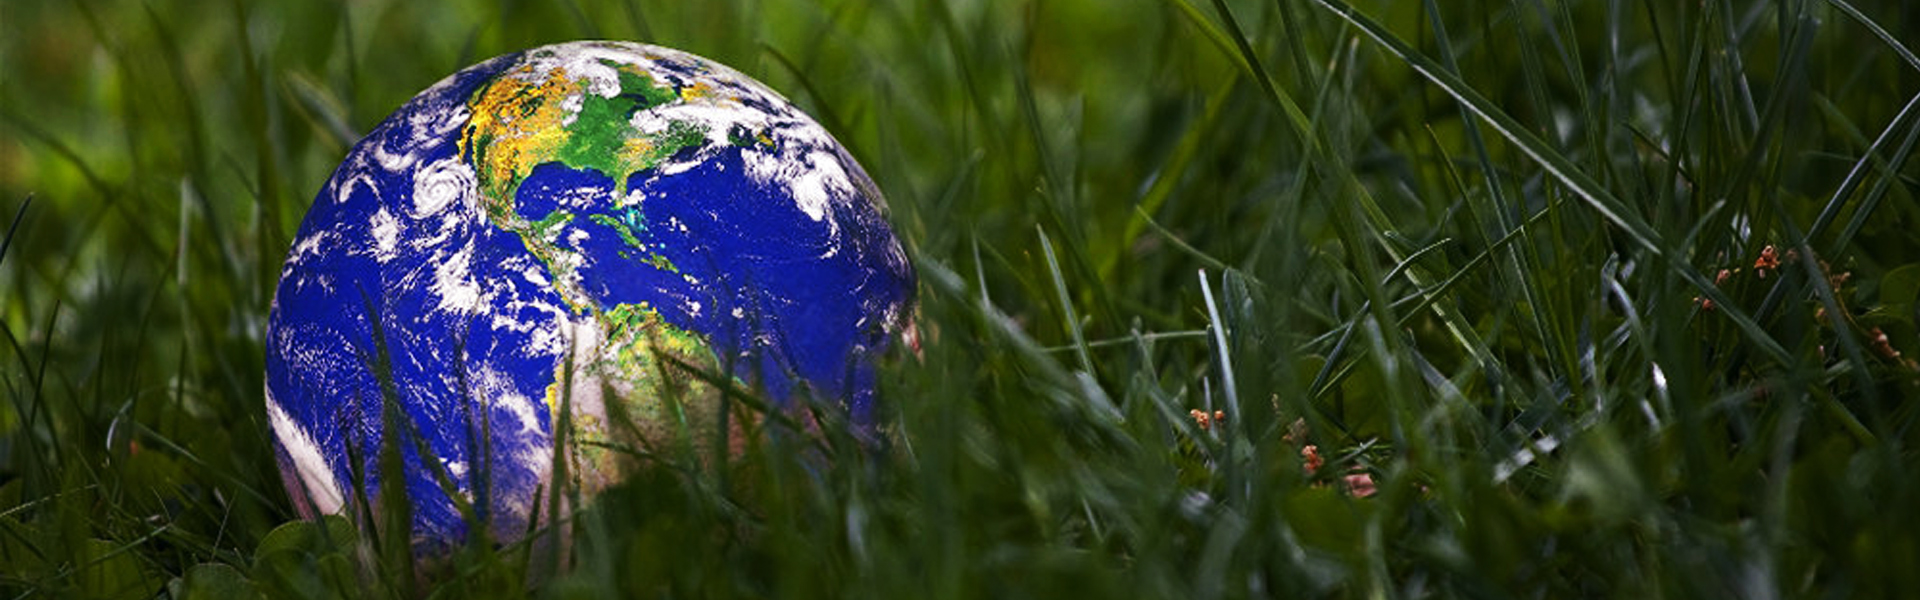 Globe in grass